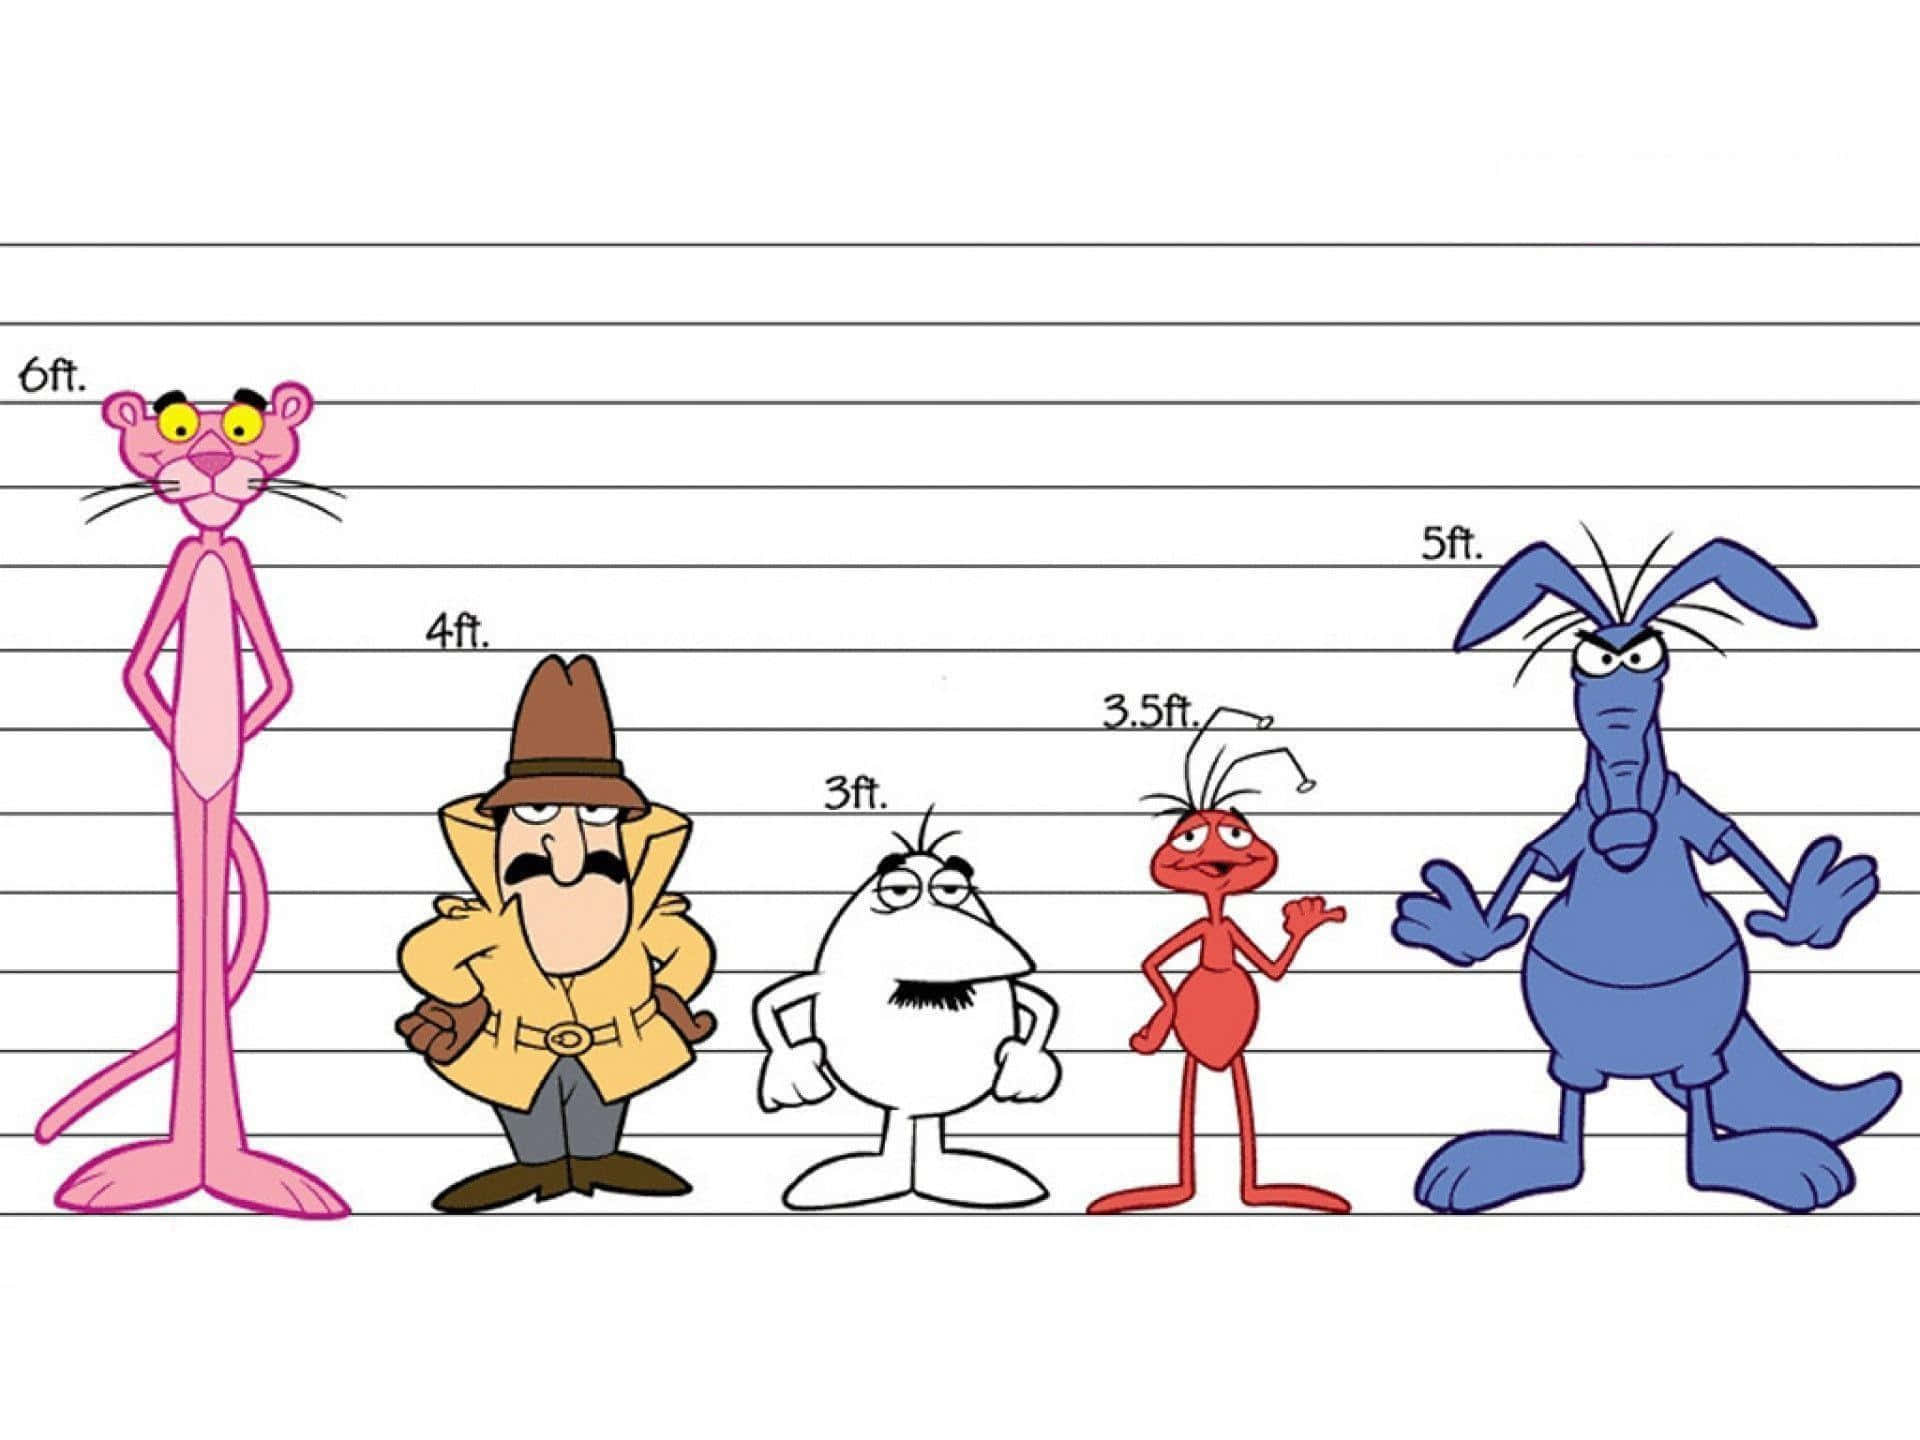 Animated Character Lineup